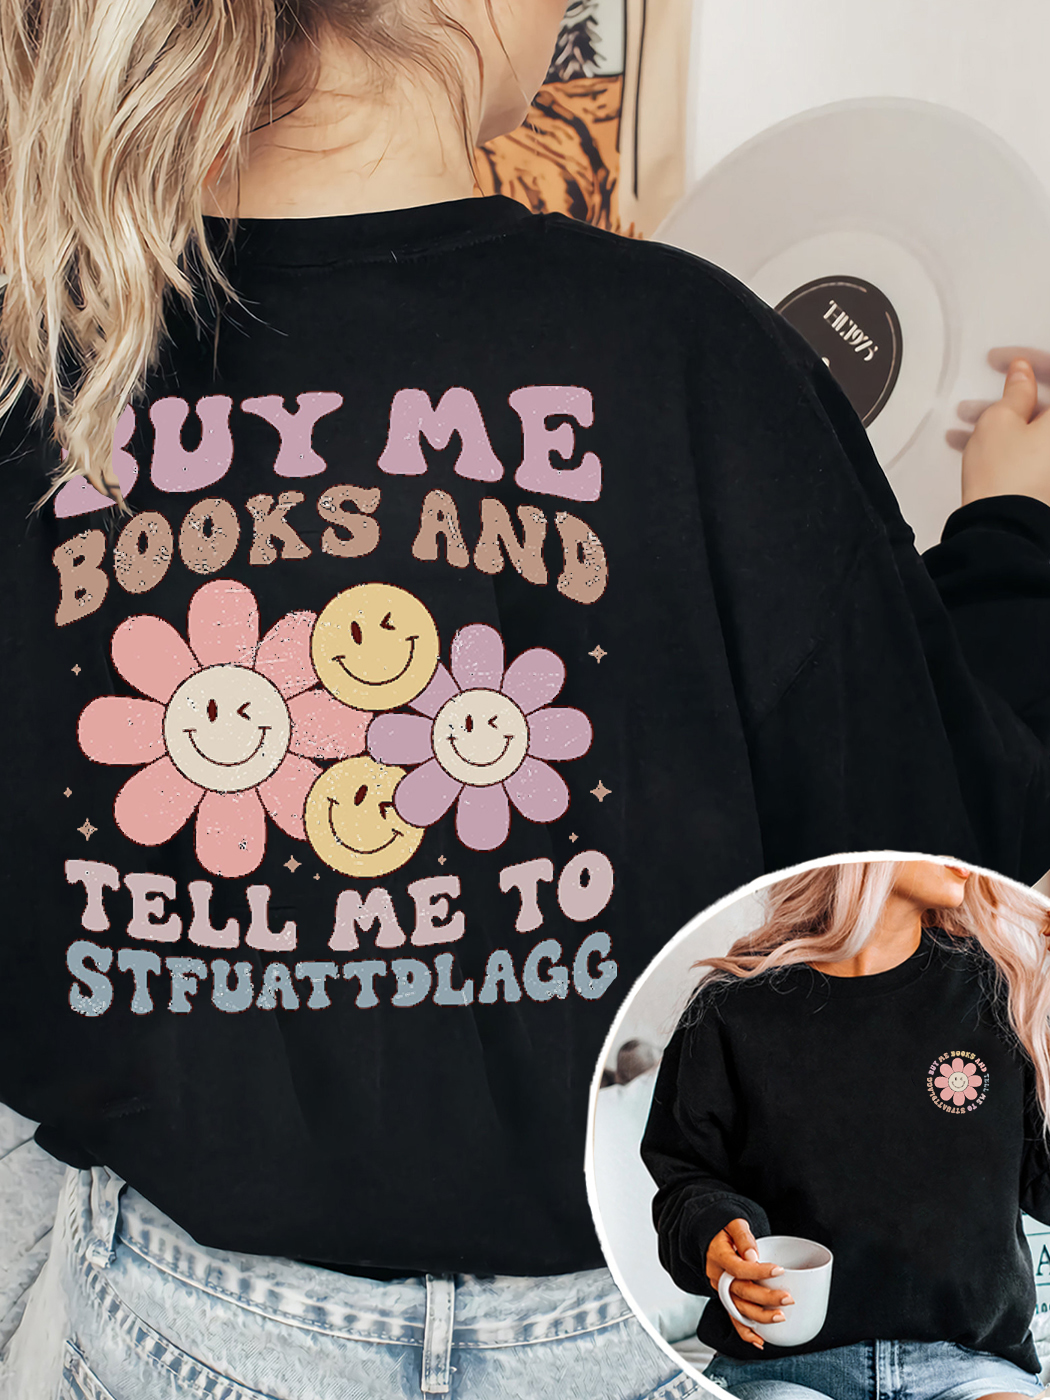 Women's Buy Me Books And Tell Me To STFUATTDLAGG Sweatshirt